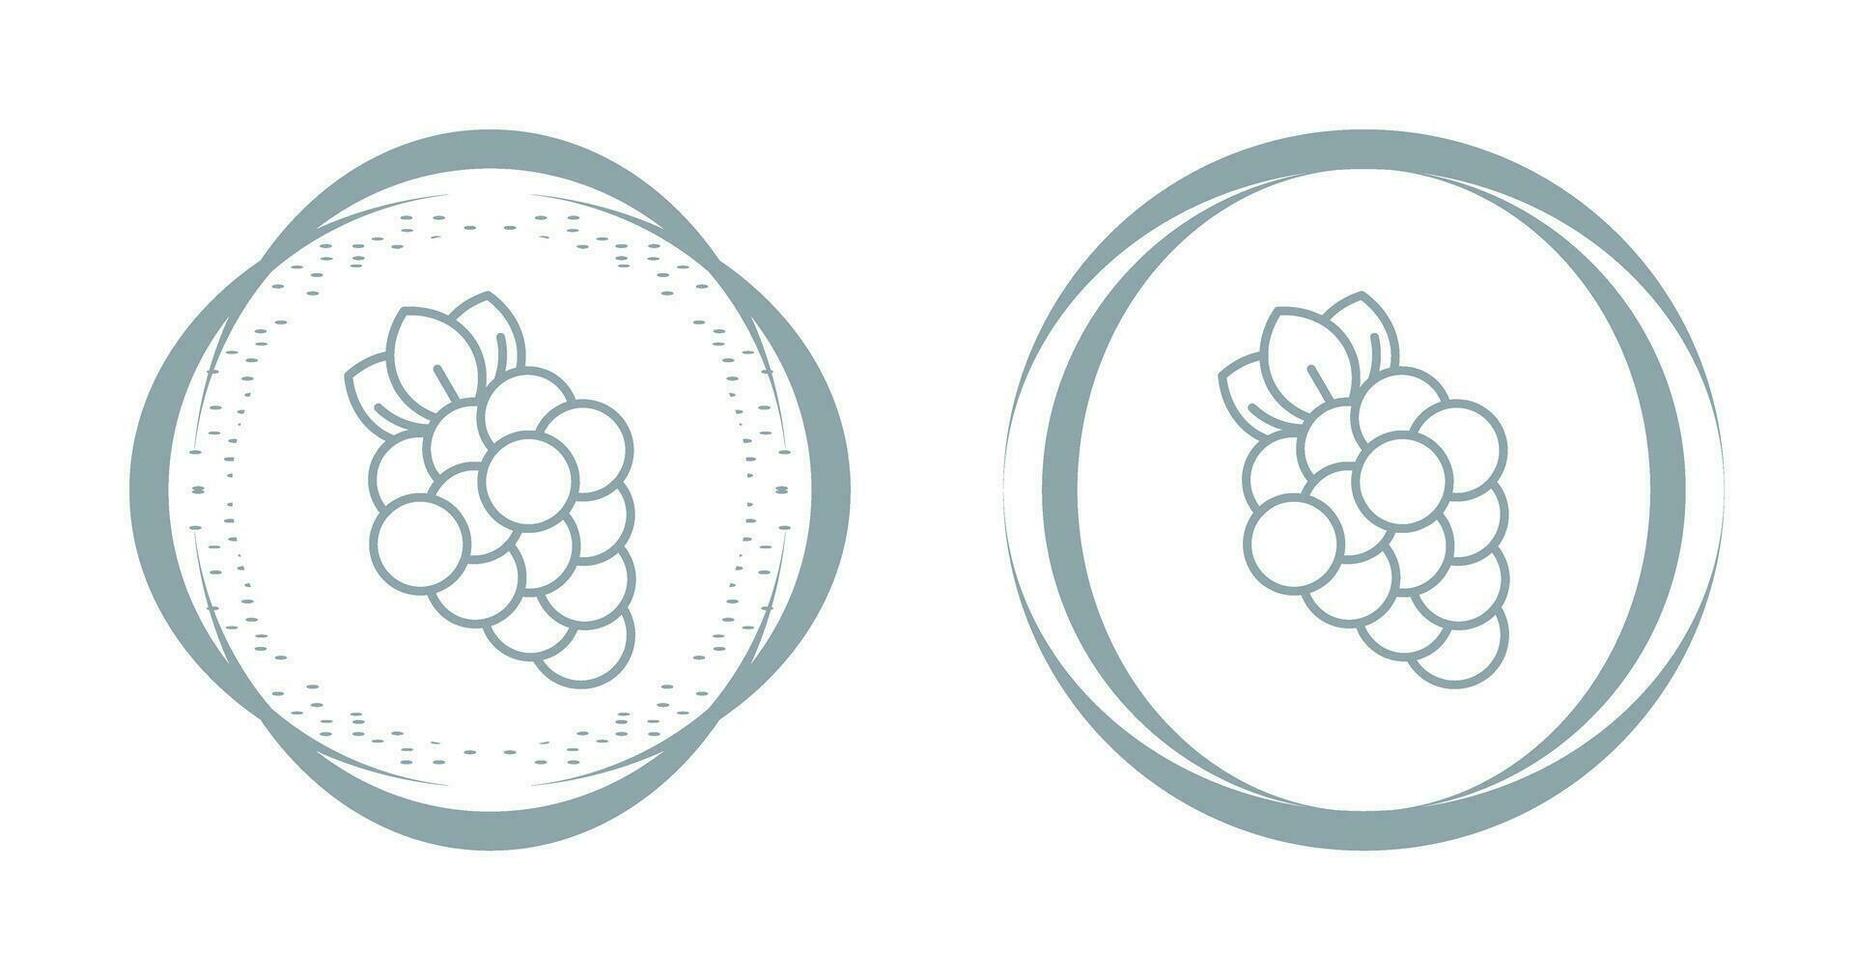 icône de vecteur de raisins